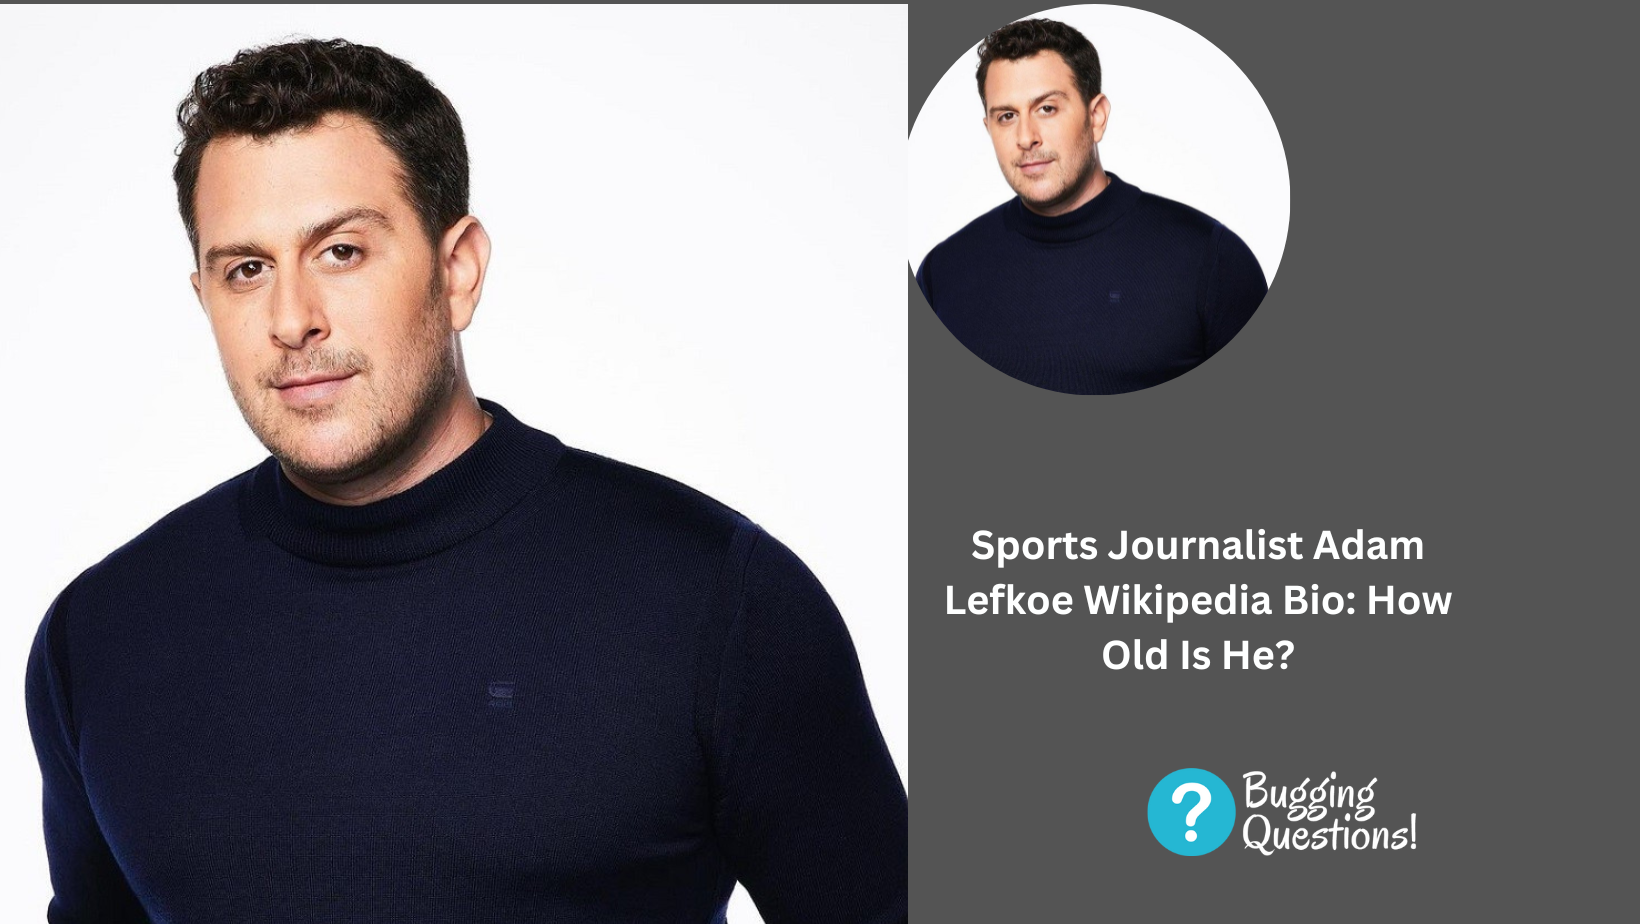 Sports Journalist Adam Lefkoe Wikipedia Bio: How Old Is He?